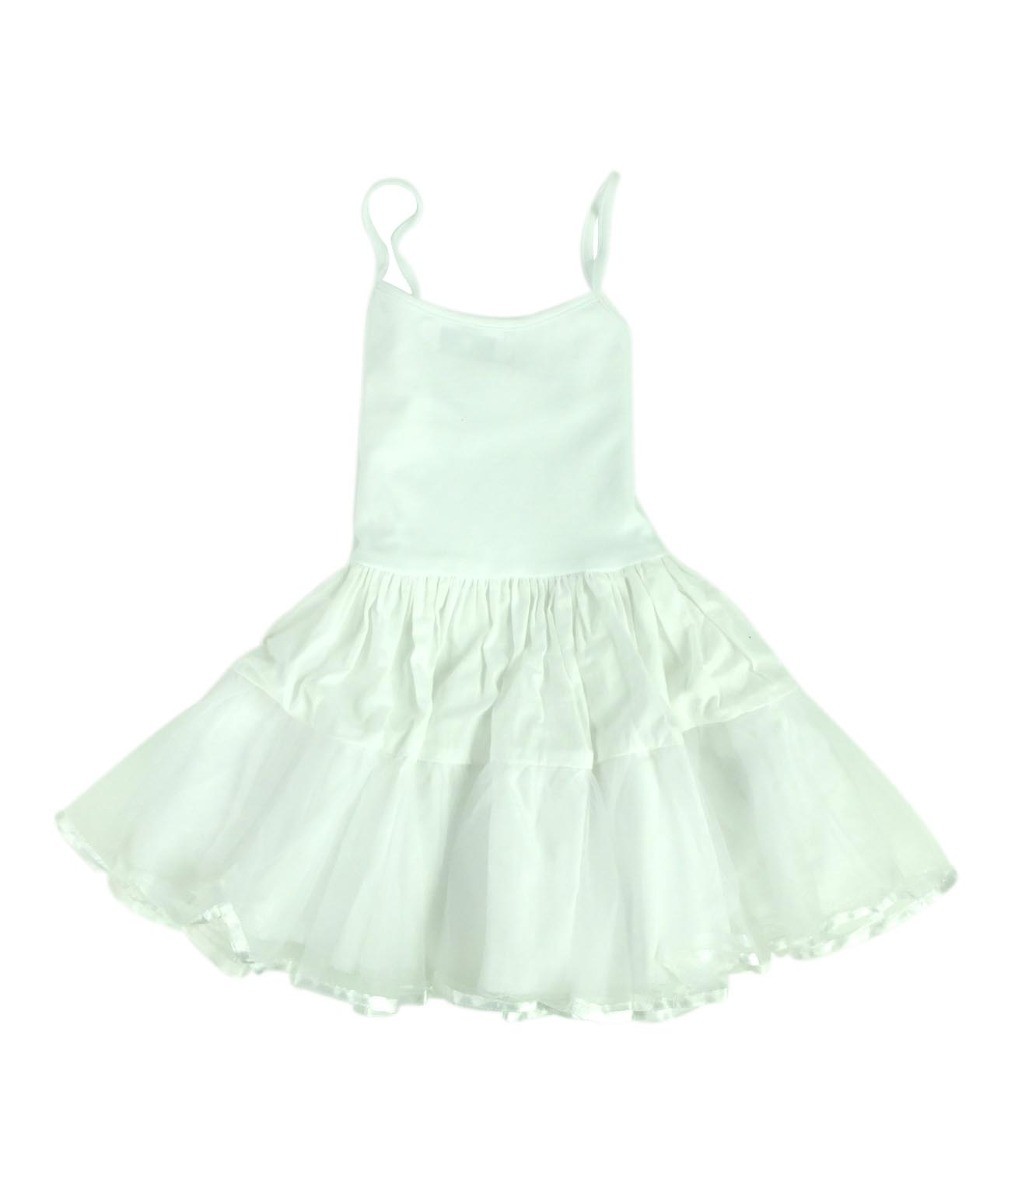 Baby Girl Ballerina Petticoat Cotton Dress - White